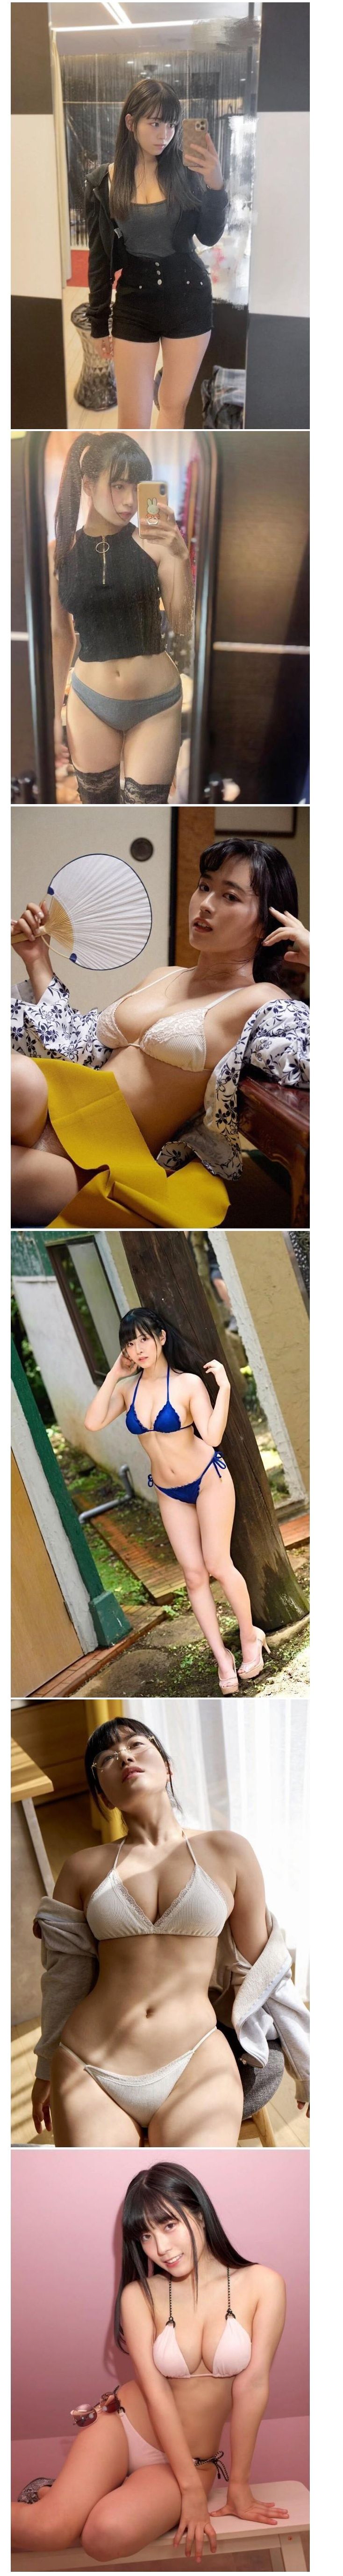 Gravure girl taking selfies, Umi Shishinome, bikini body